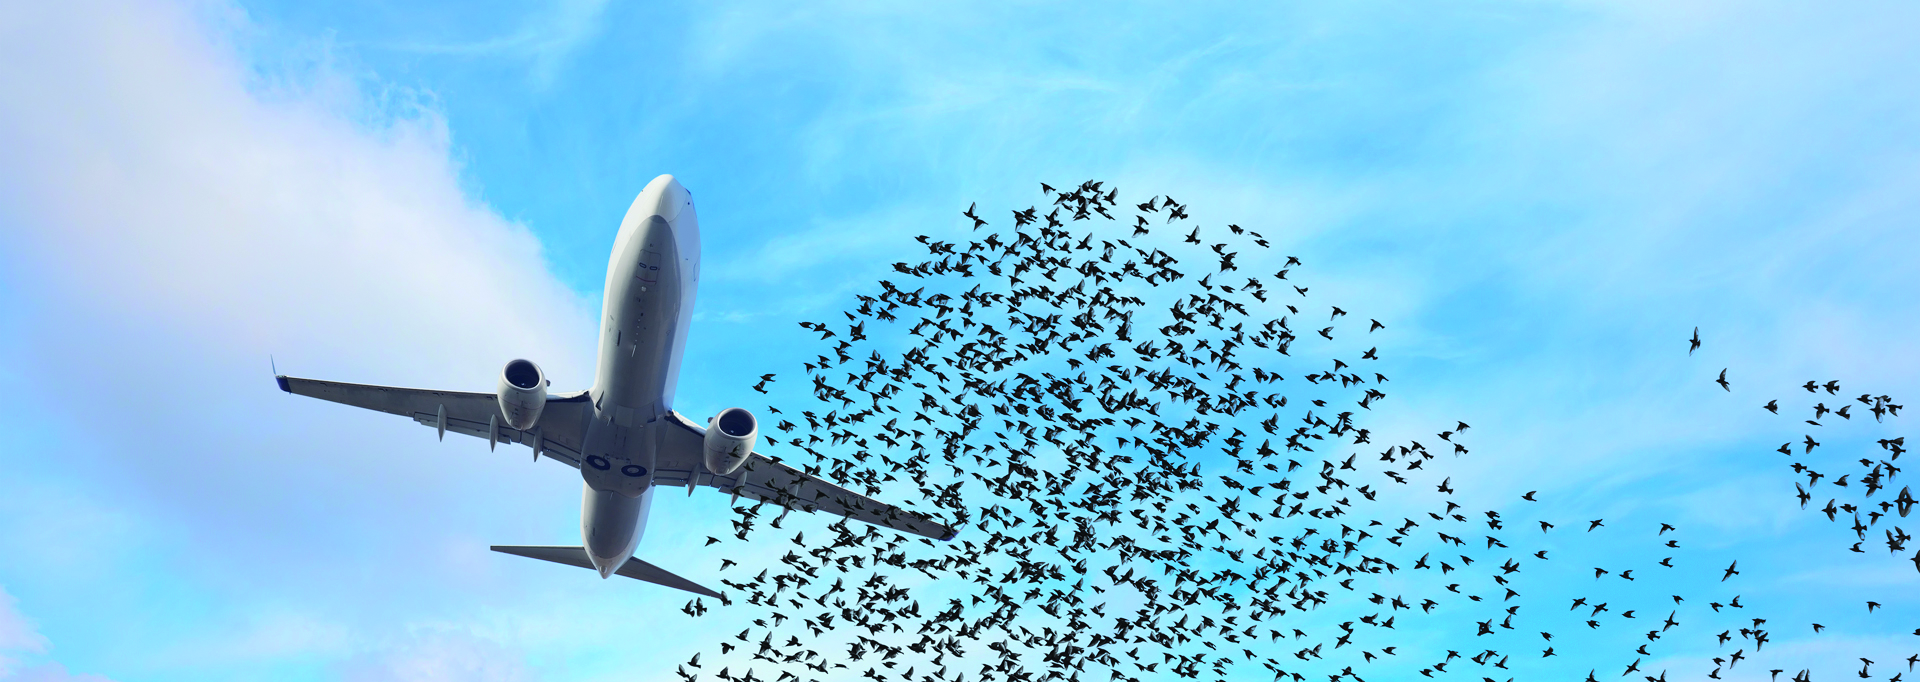 BCMS-VENTUR-BIRDSTRIKE-THE-EDGE-COMPANY-AIRPORT-SAFETY